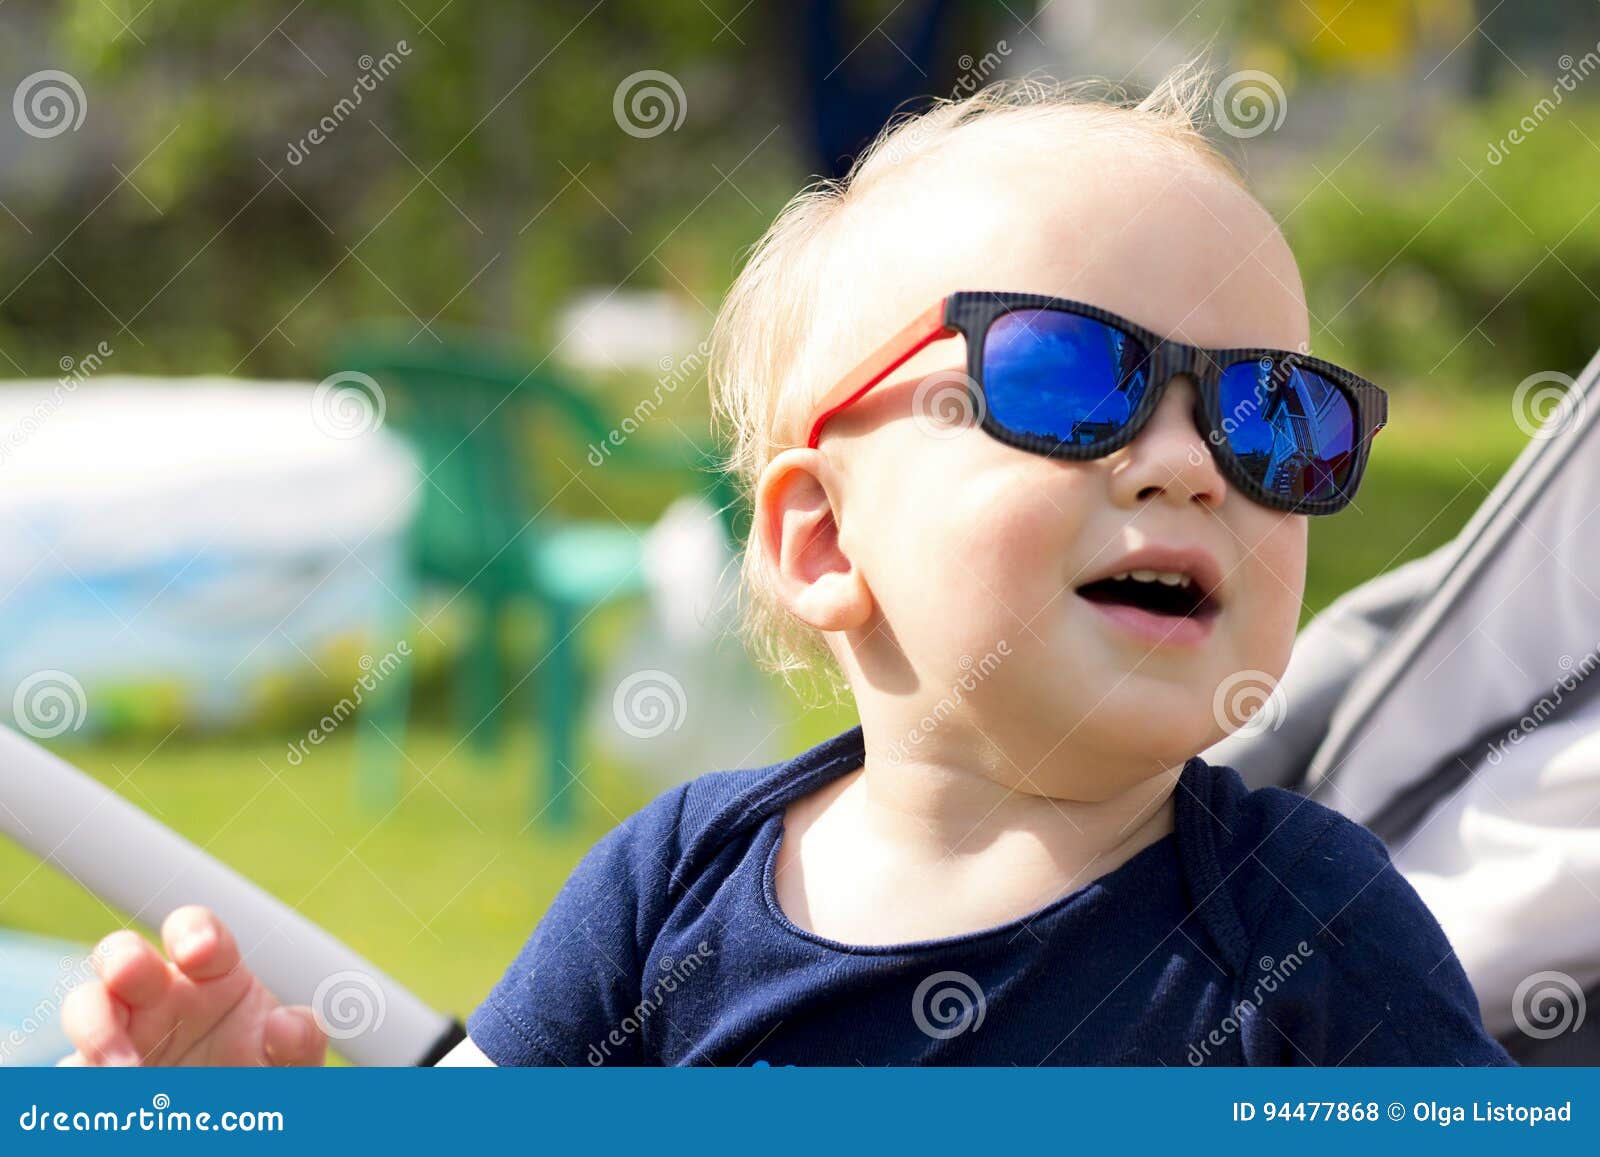 Baby Boy Sunglasses Stock Photos Download 2528 Royalty Free Photos